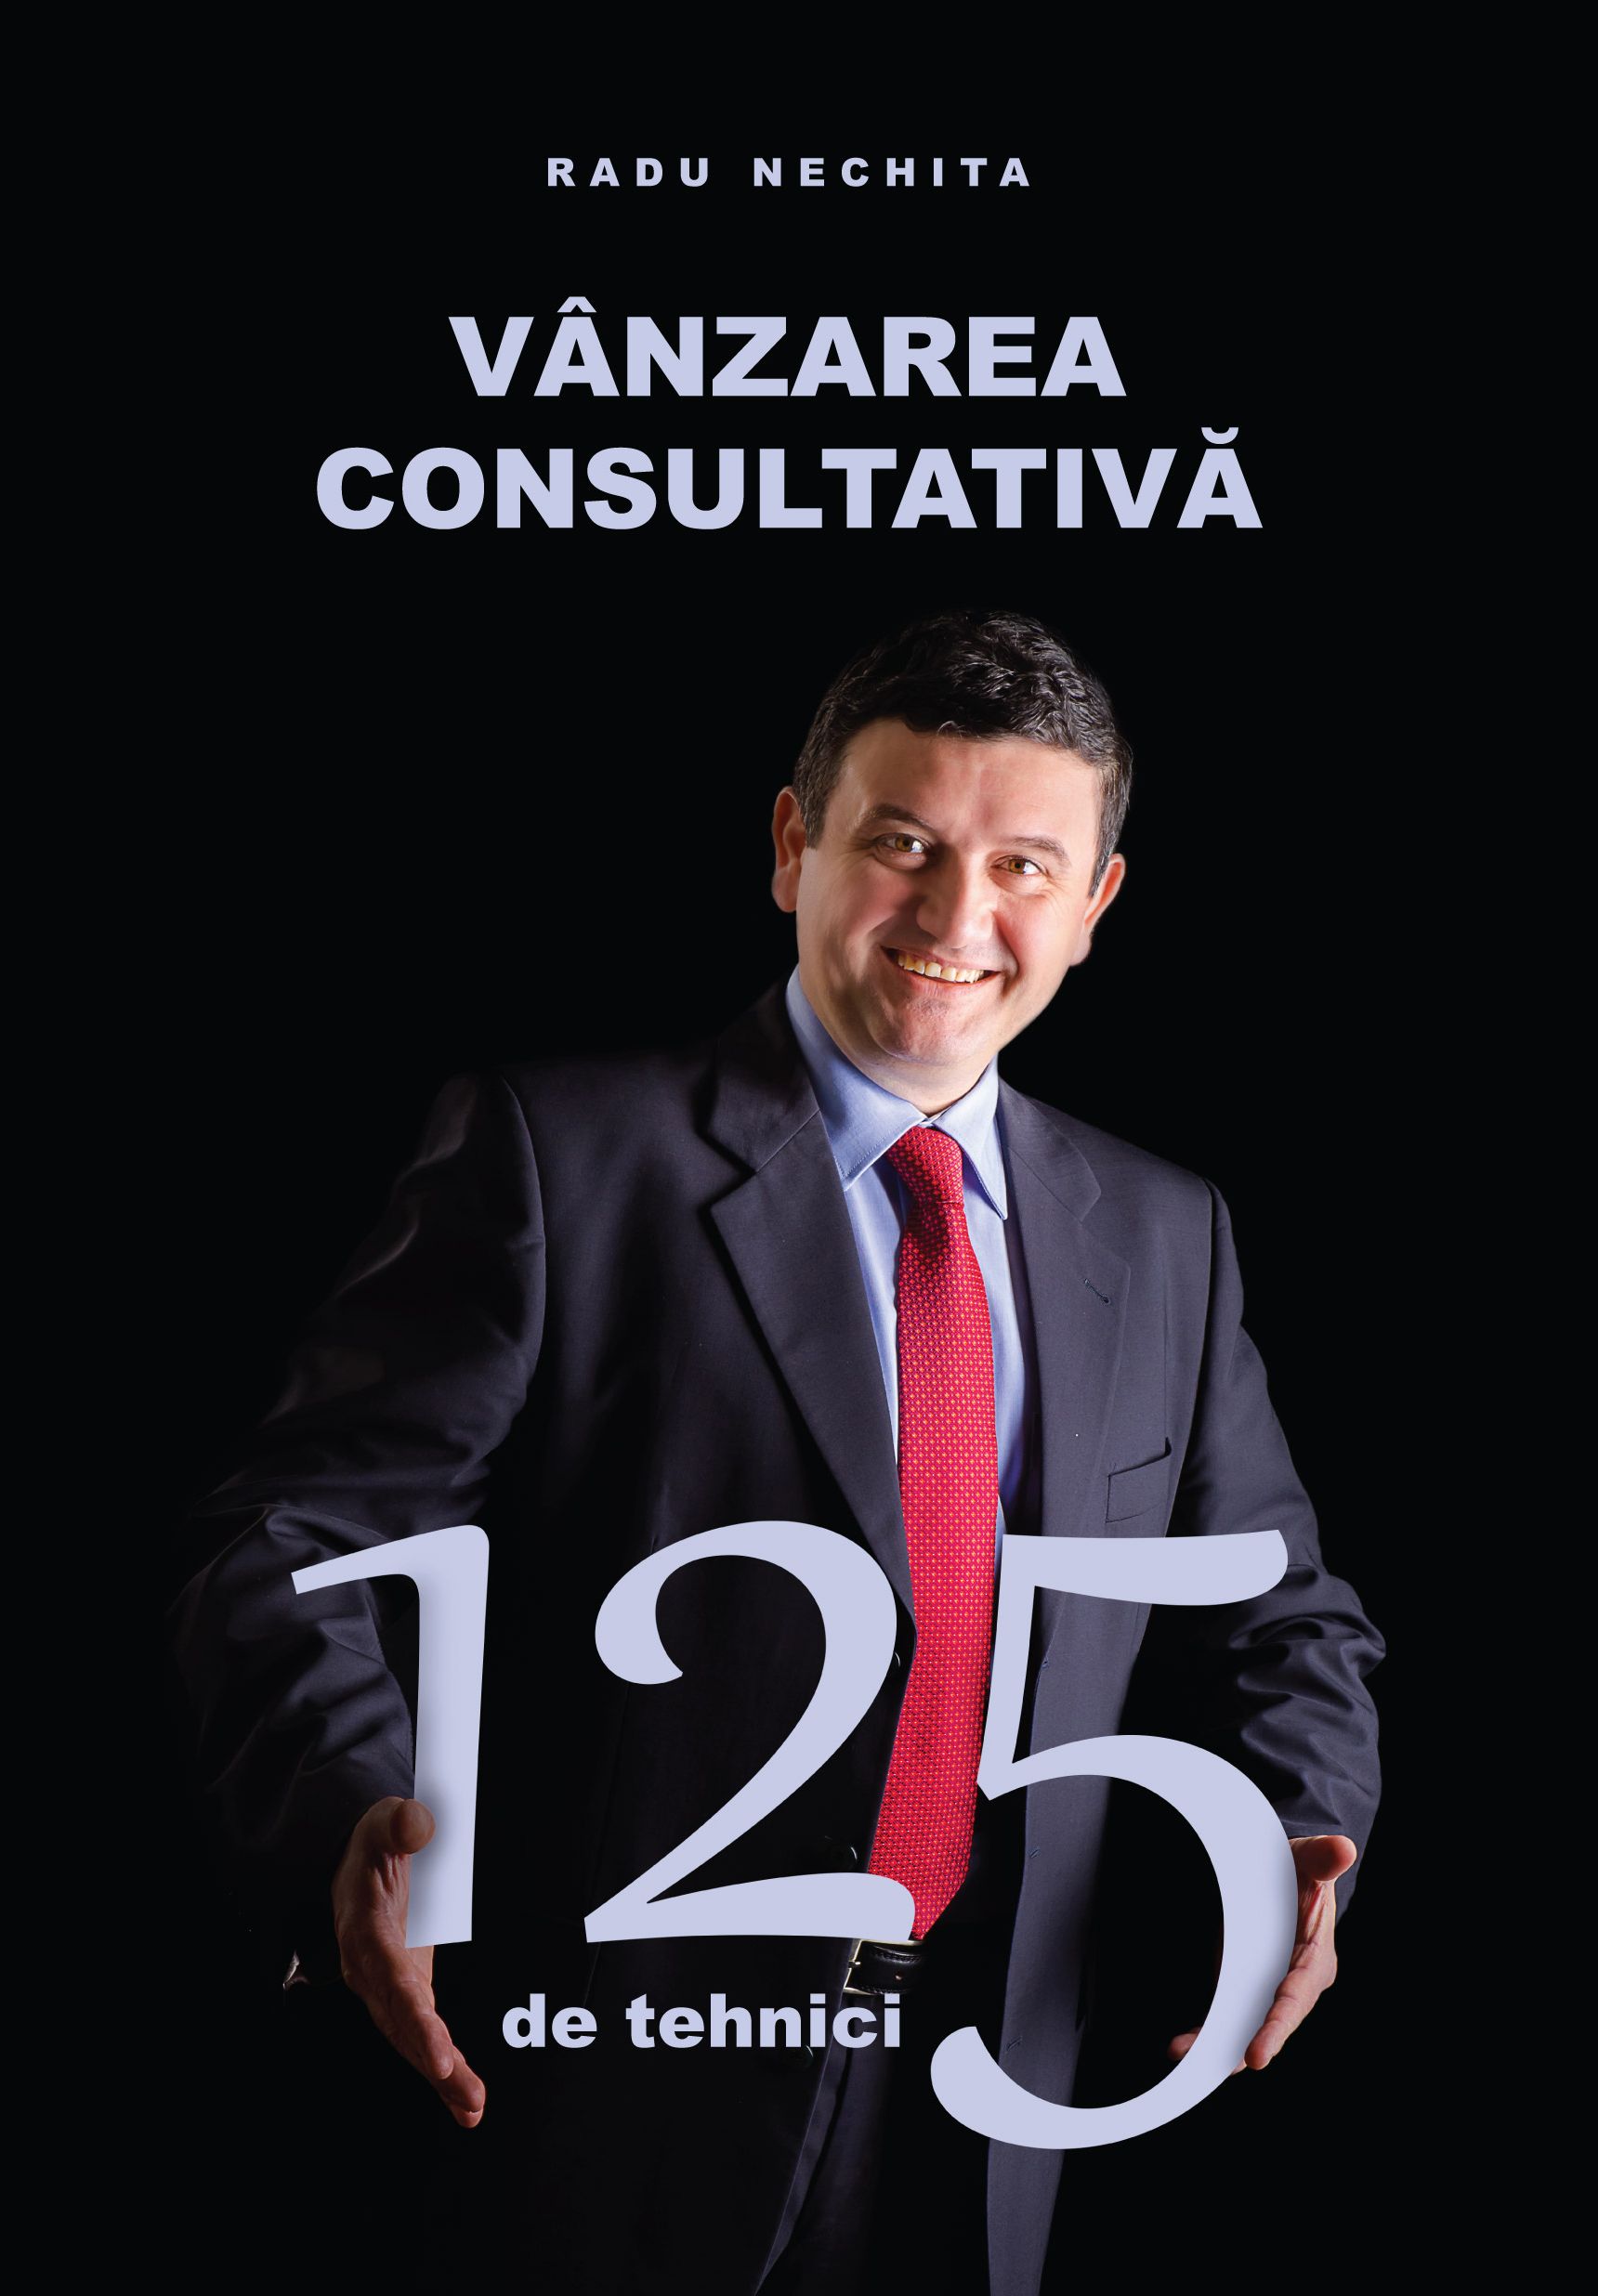 Vanzarea consultativa. 125 de tehnici | Radu Nechita carturesti.ro imagine 2022